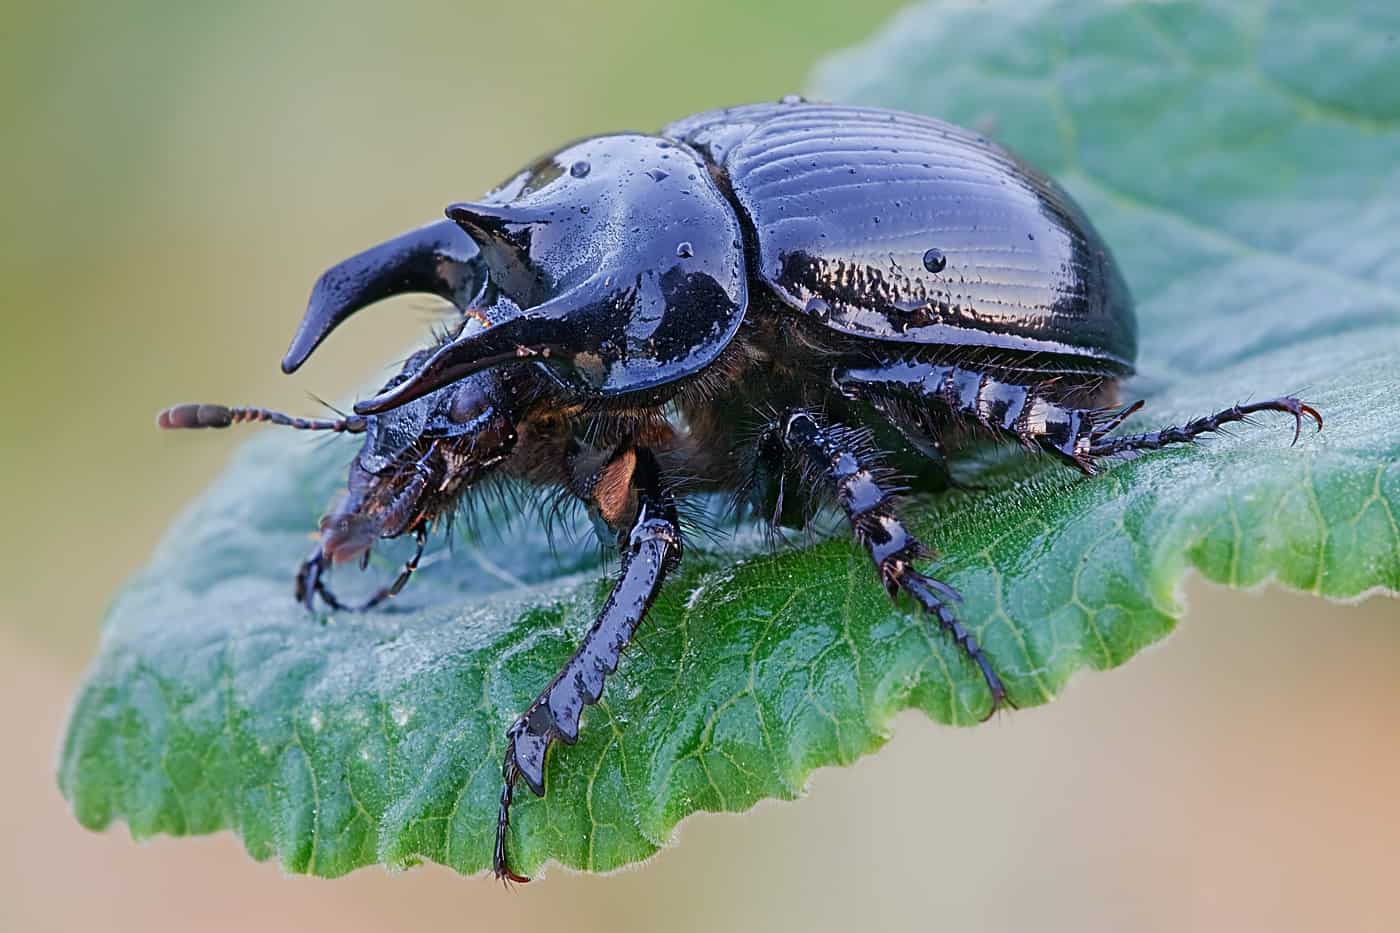 Minatour Dung Beetle on a leaf